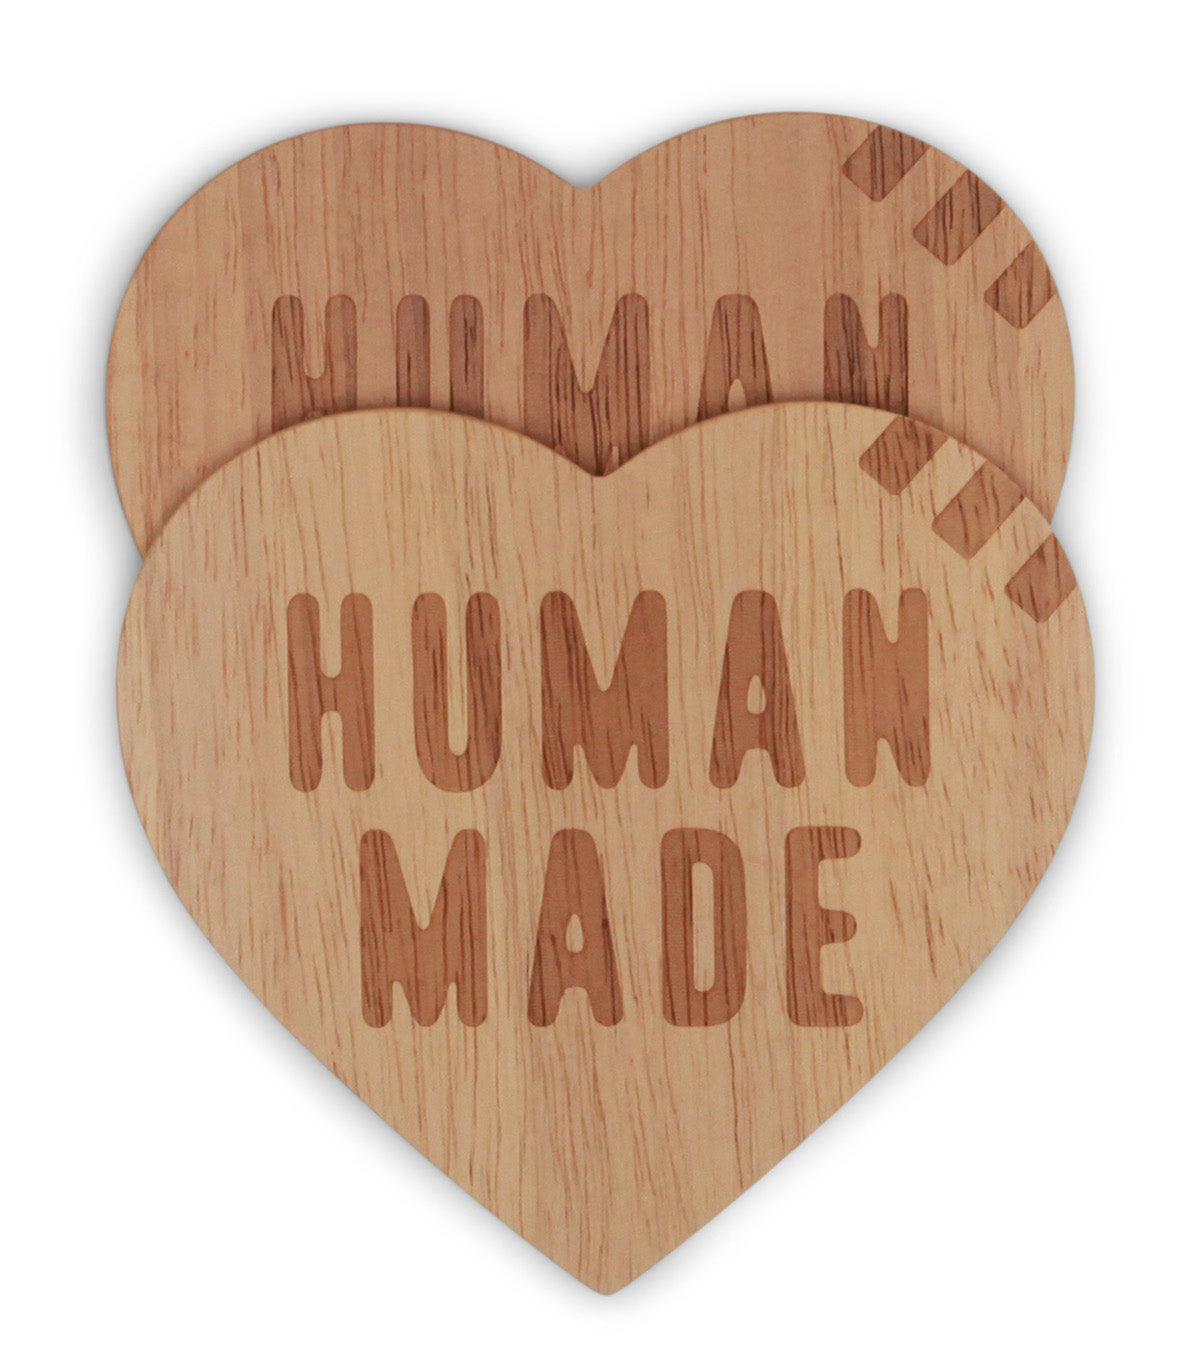 Human Made Heart Carabiner Red